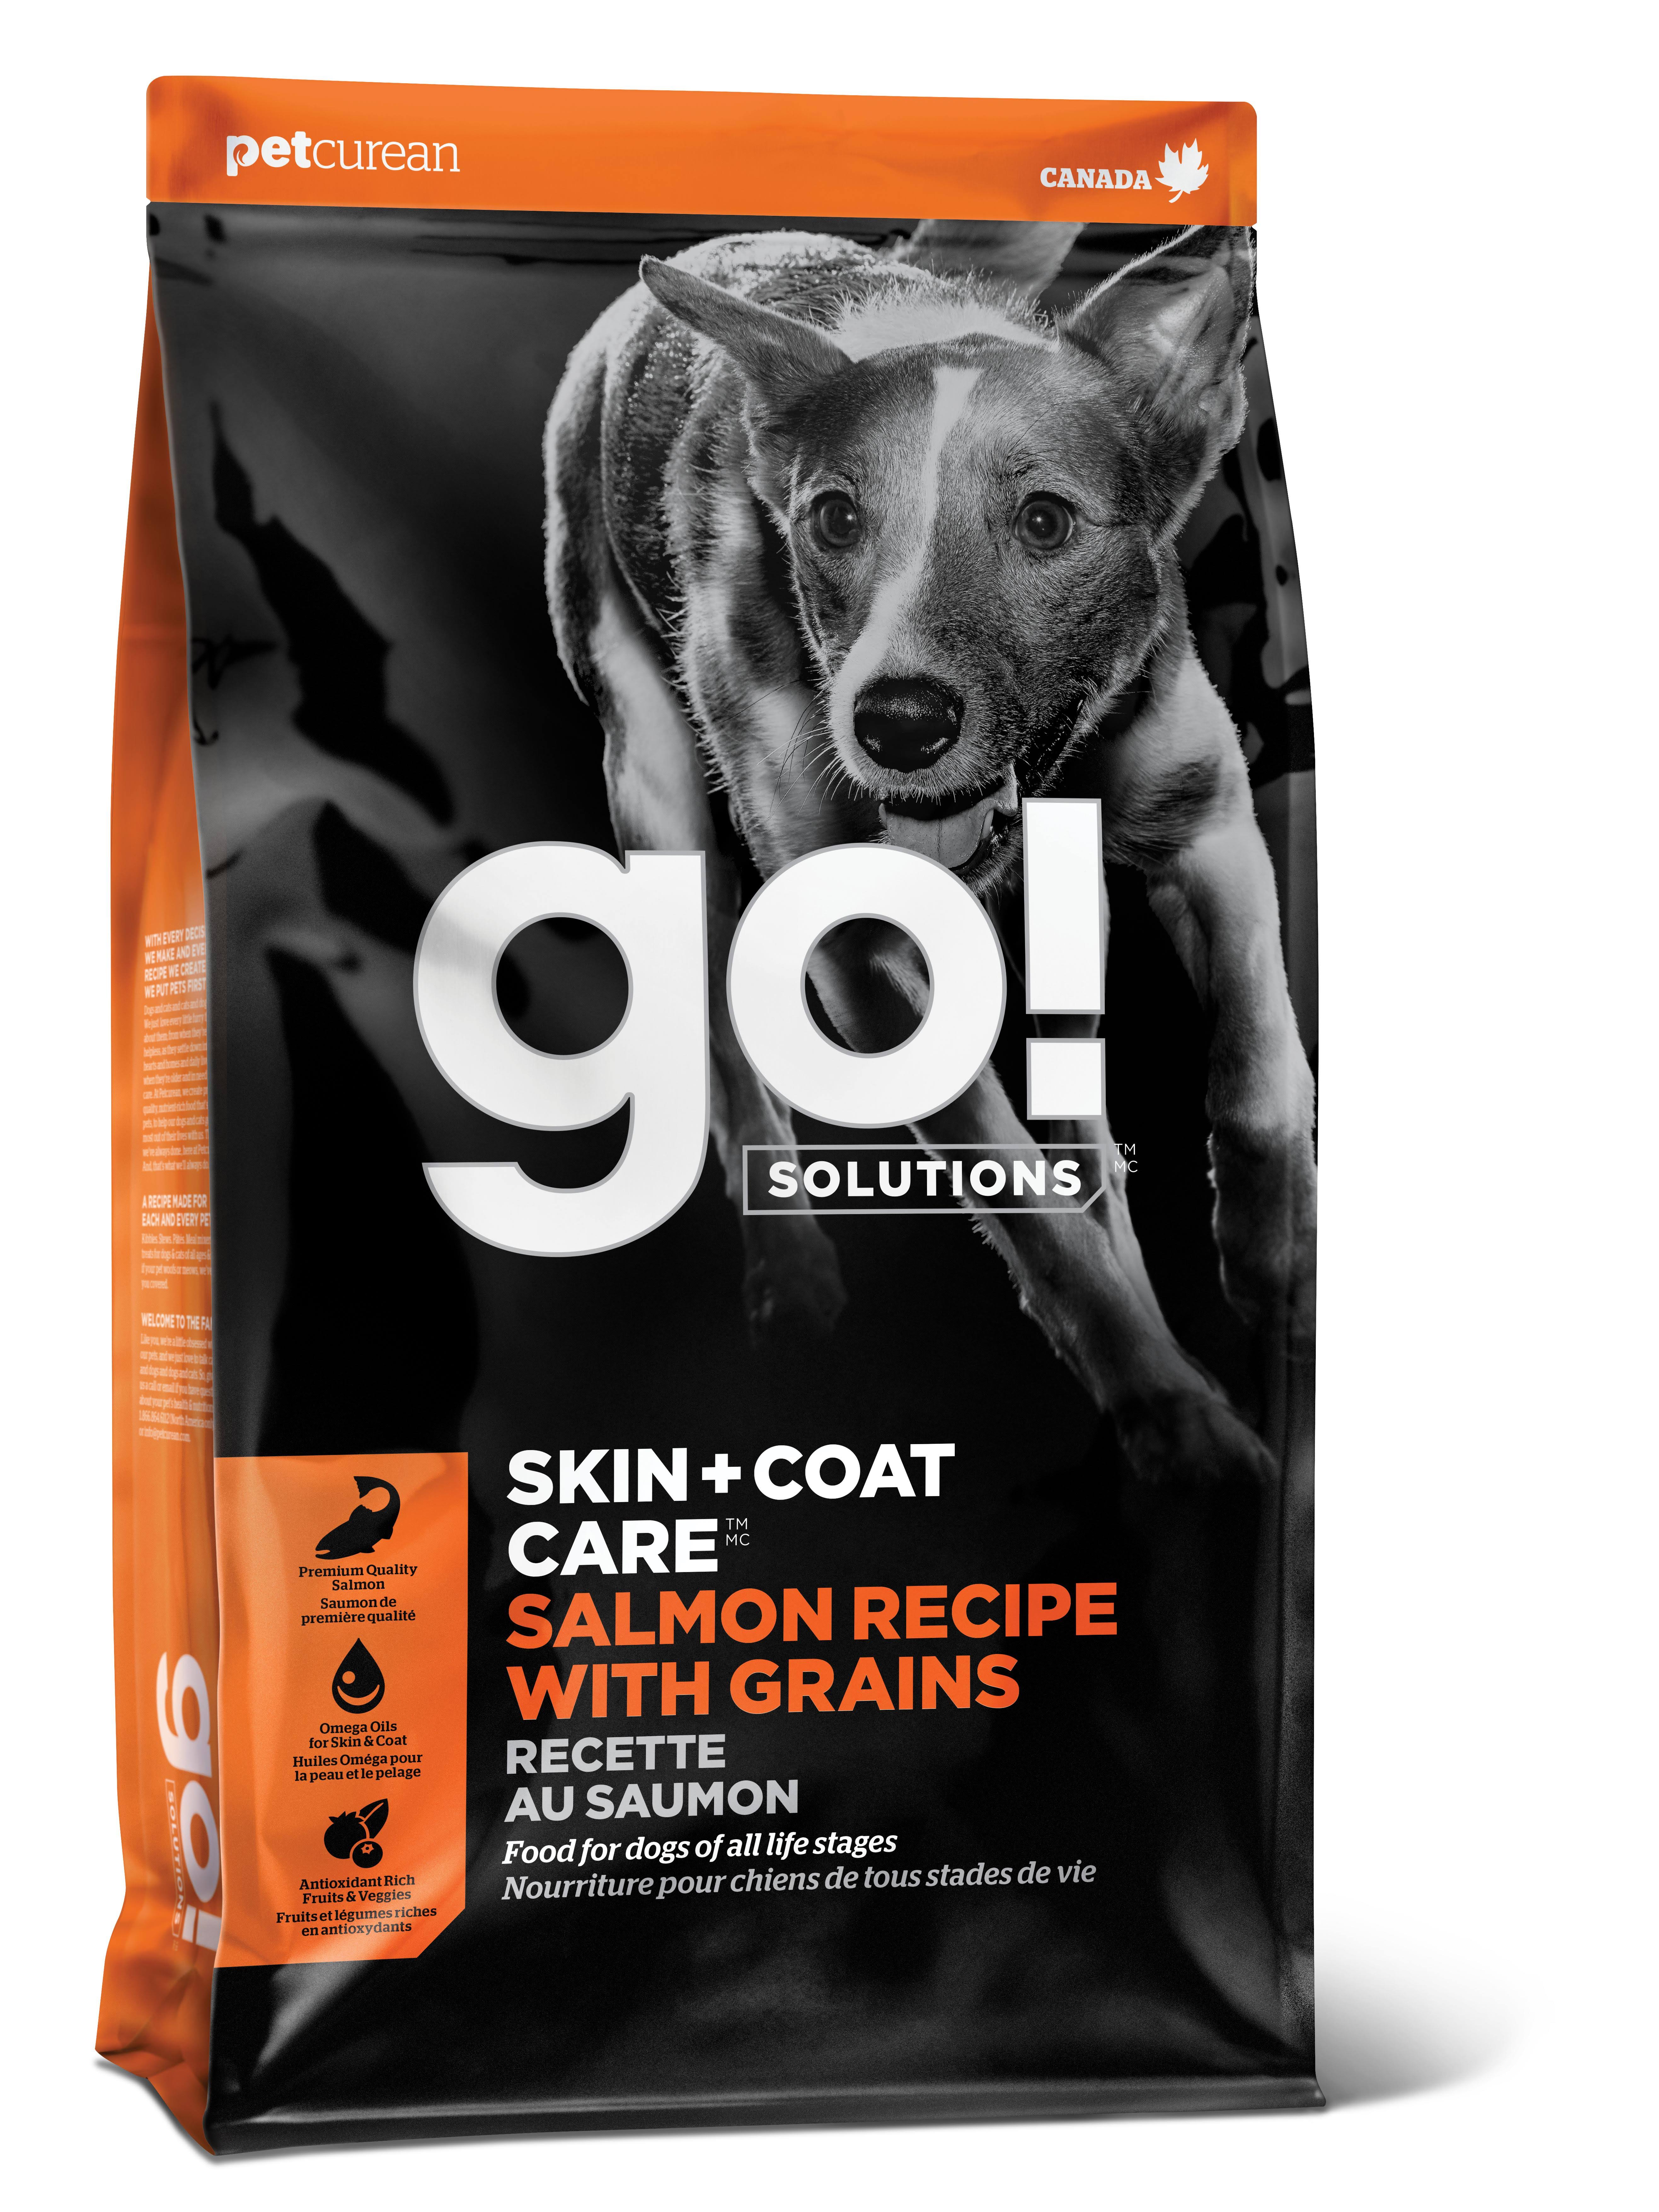 Petcurean Go! Solutions Skin + Coat Care Dry Dog Food - Salmon Recipe - 25 lb. Bag